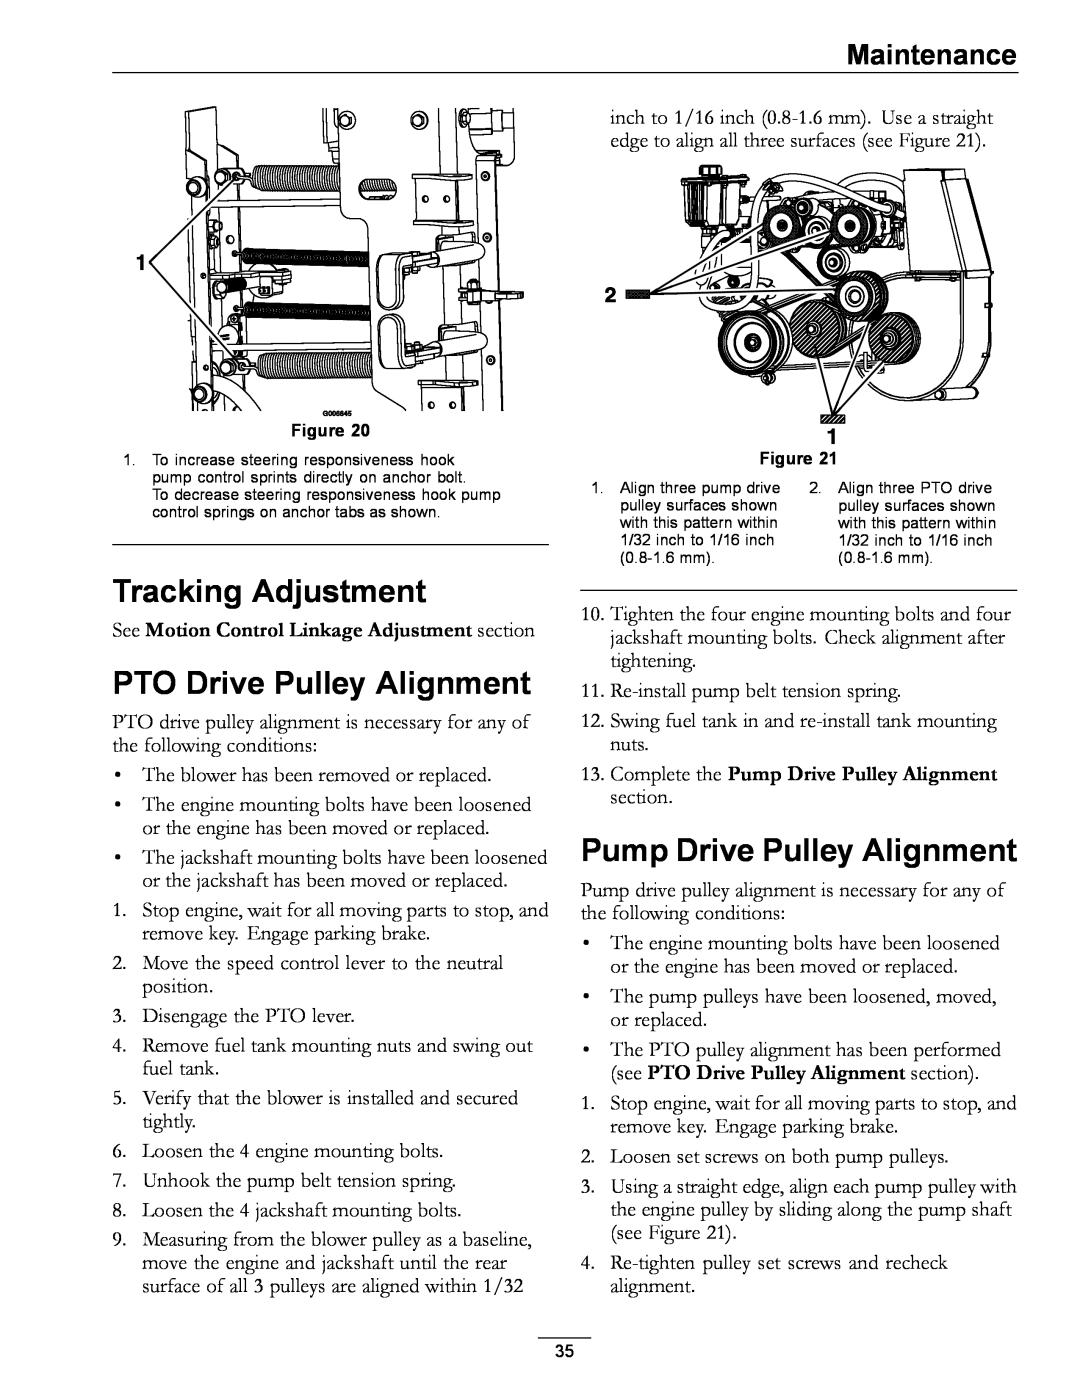 Exmark 850 manual Tracking Adjustment, PTO Drive Pulley Alignment, Pump Drive Pulley Alignment, Maintenance 